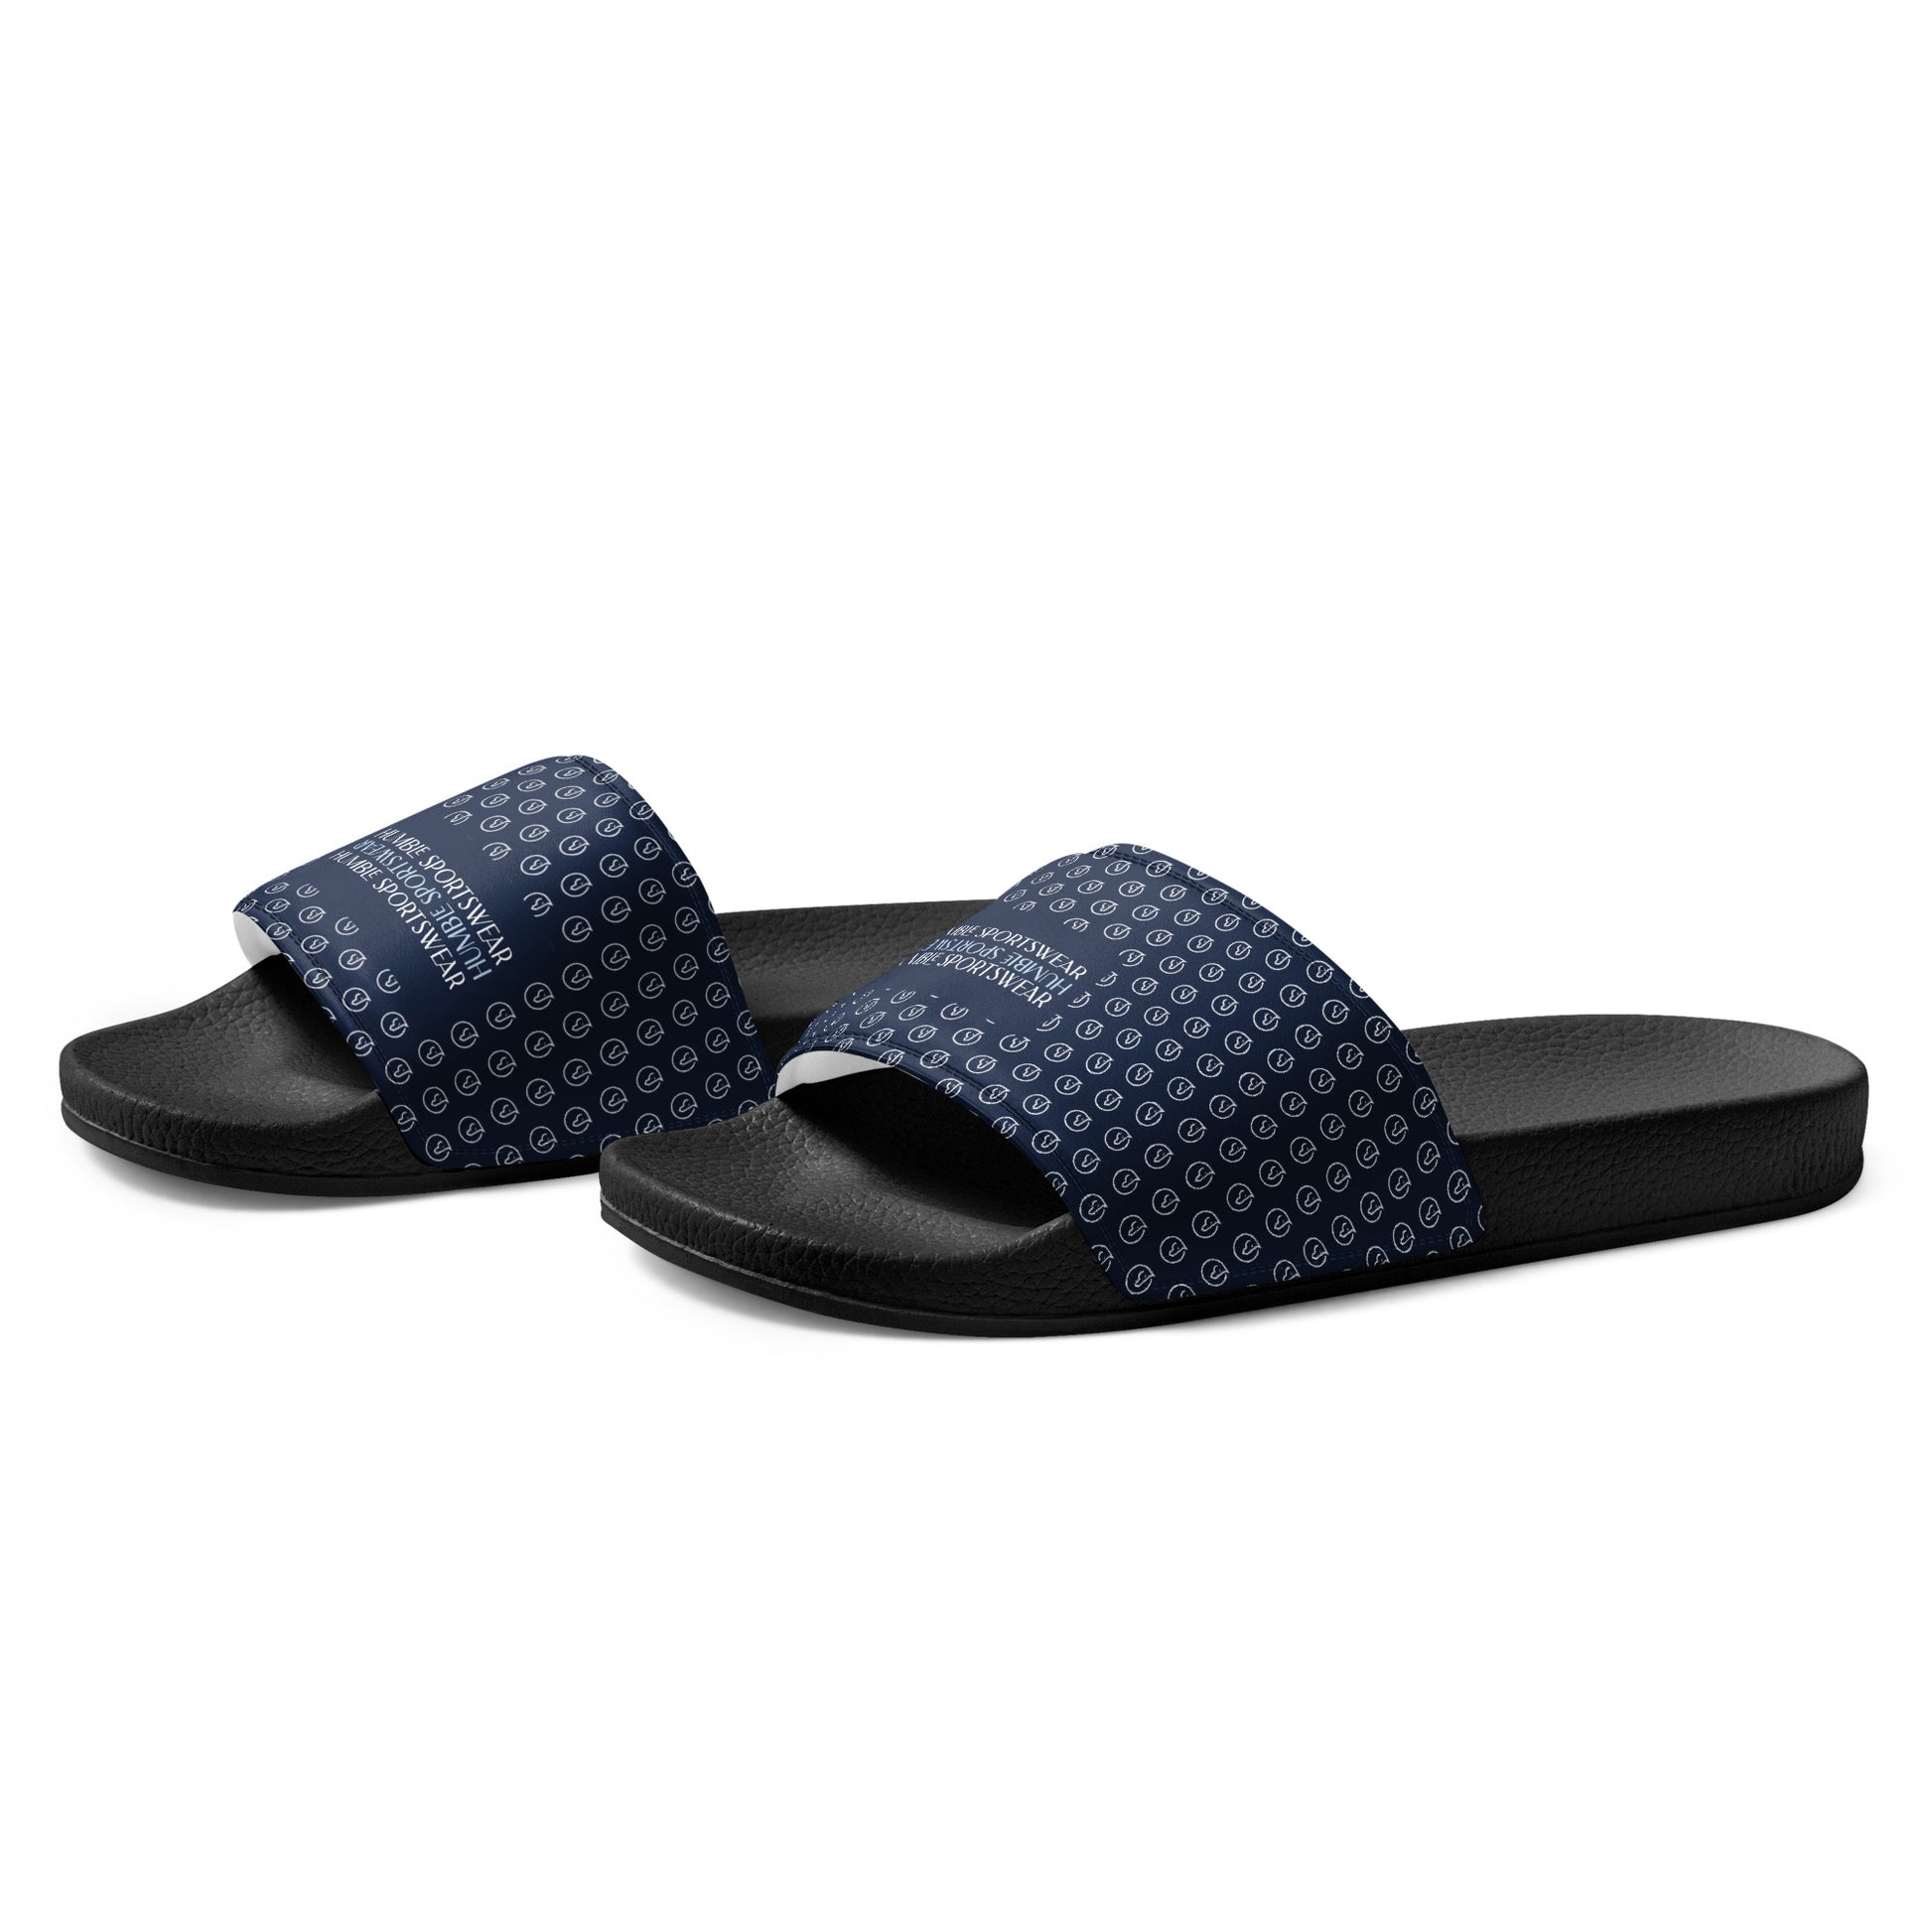 Humble Sportswear, men's casual navy blue Color Match slip-on slides sandals 